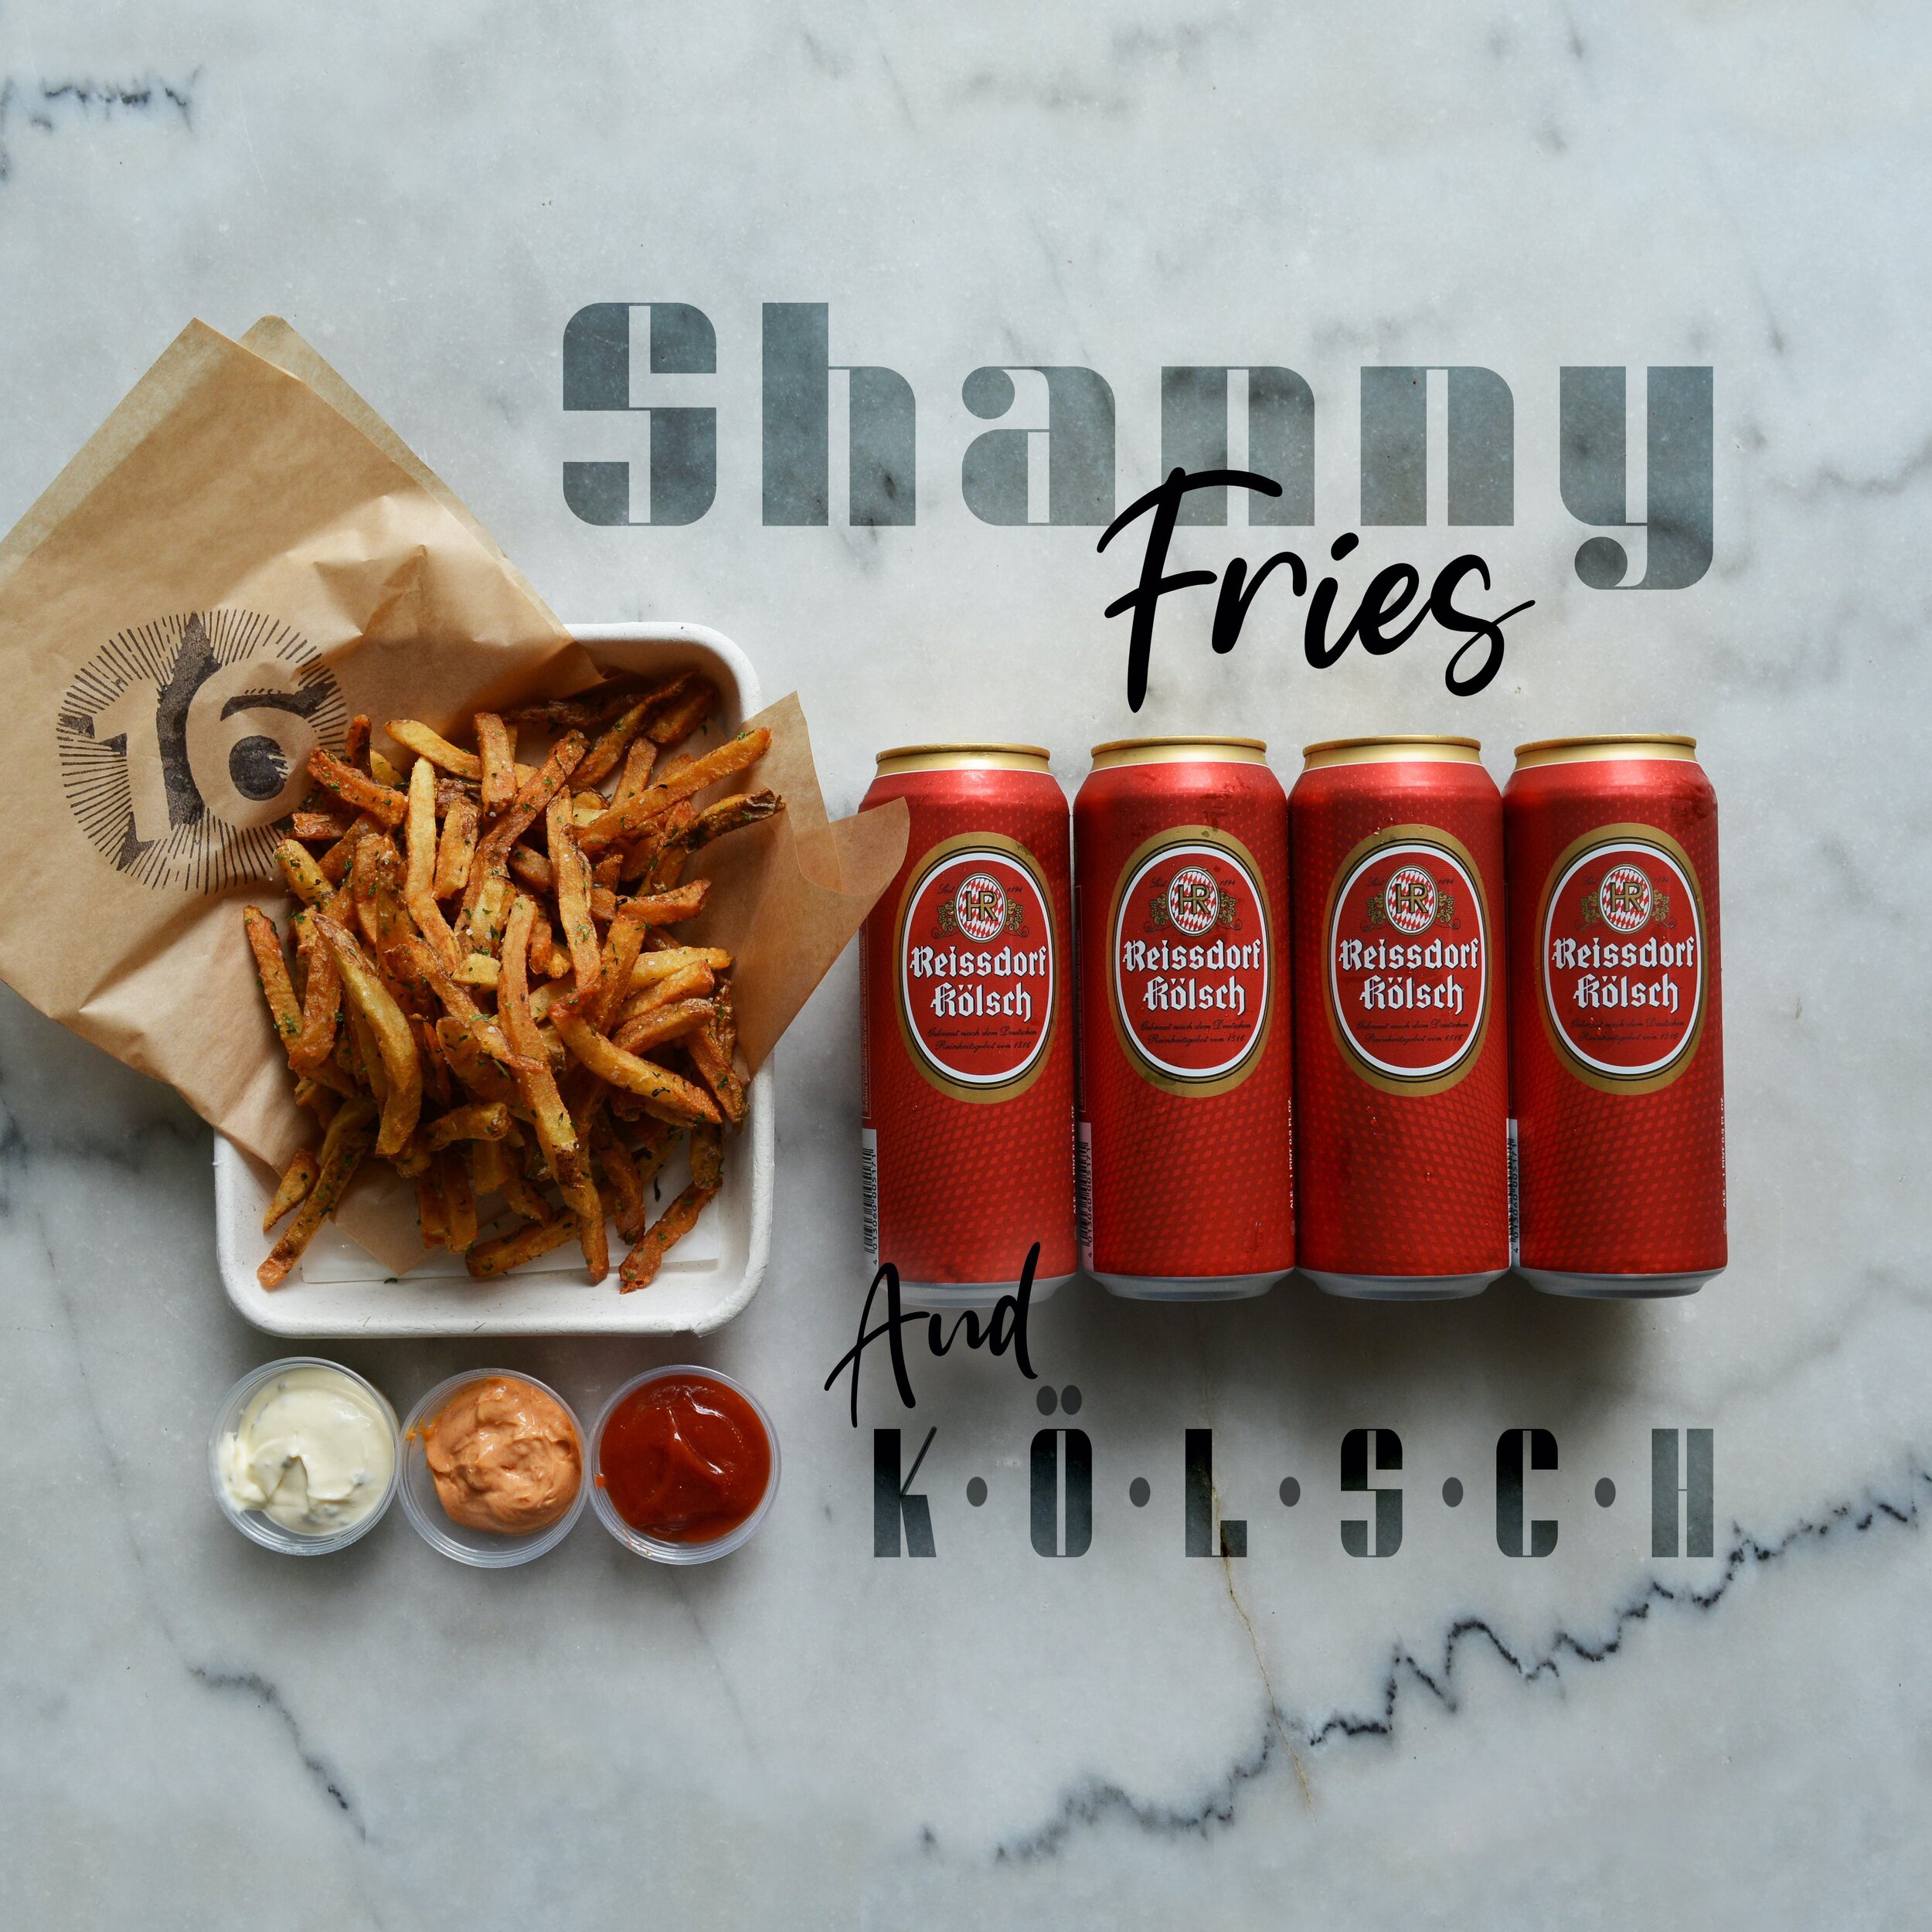 Shanny Fries copy.jpg